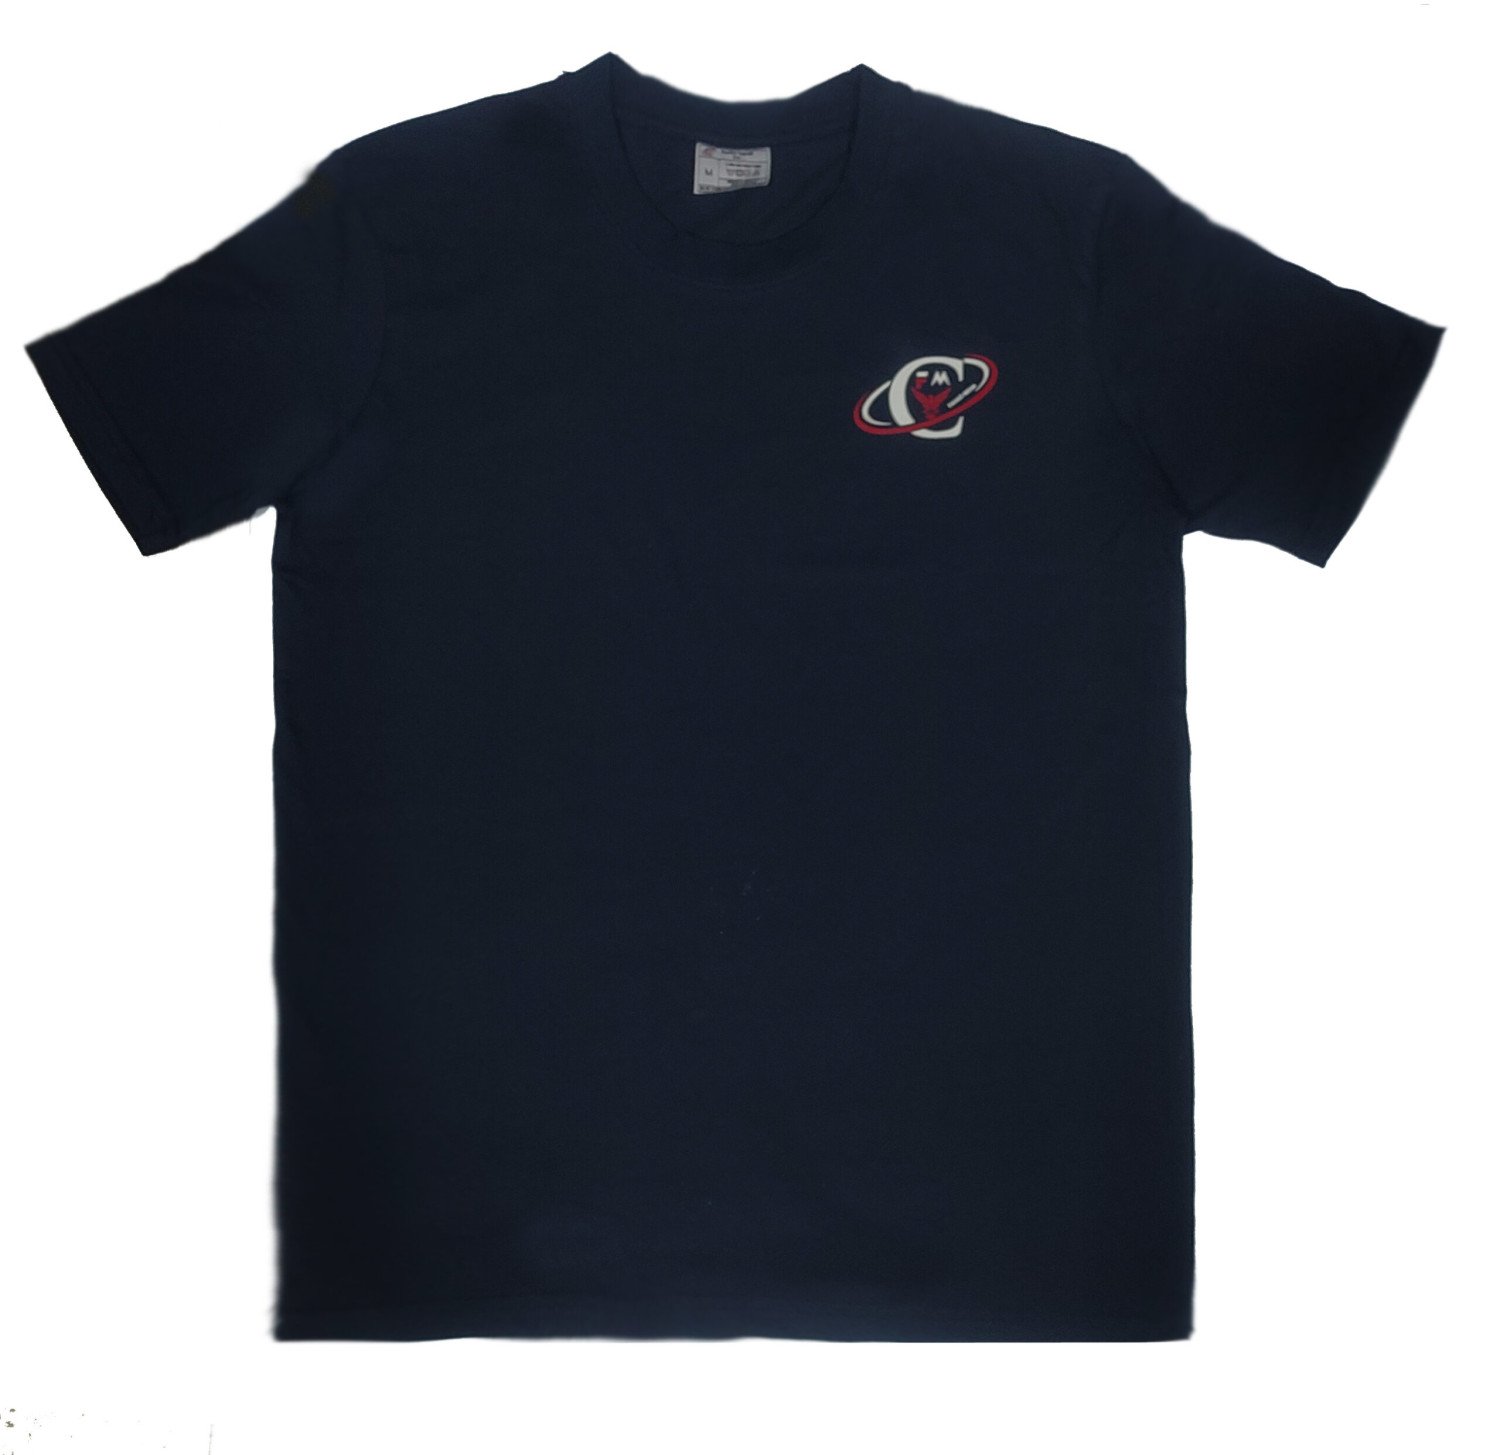 FM Premium Cotton T-Shirt Navyblue